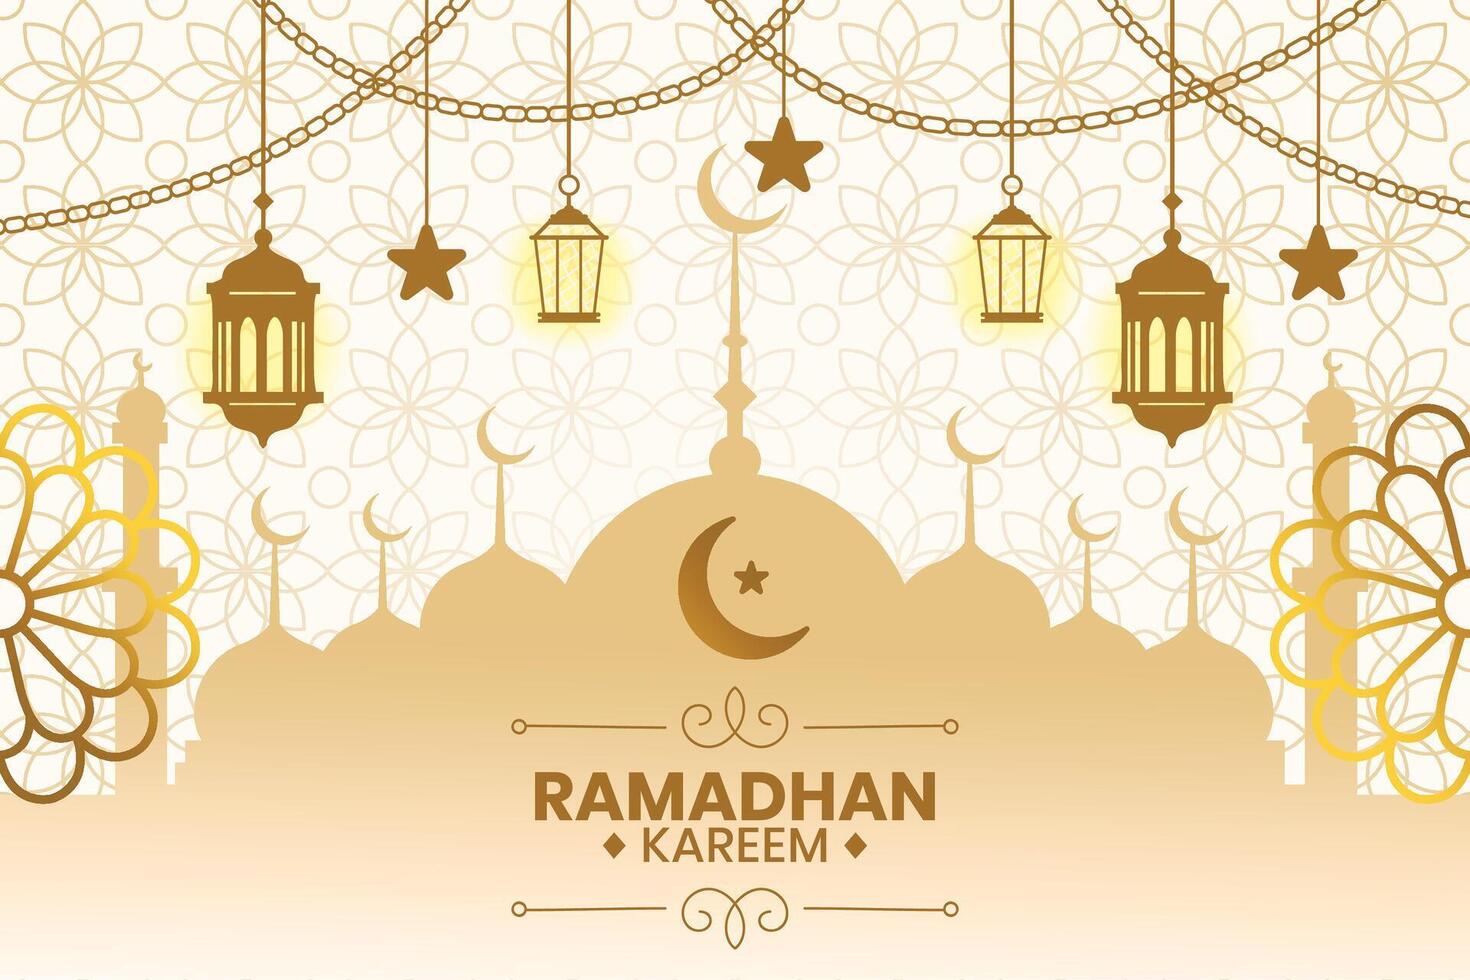 Ramadan kareem décoratif Festival carte.vecteur illustration. vecteur